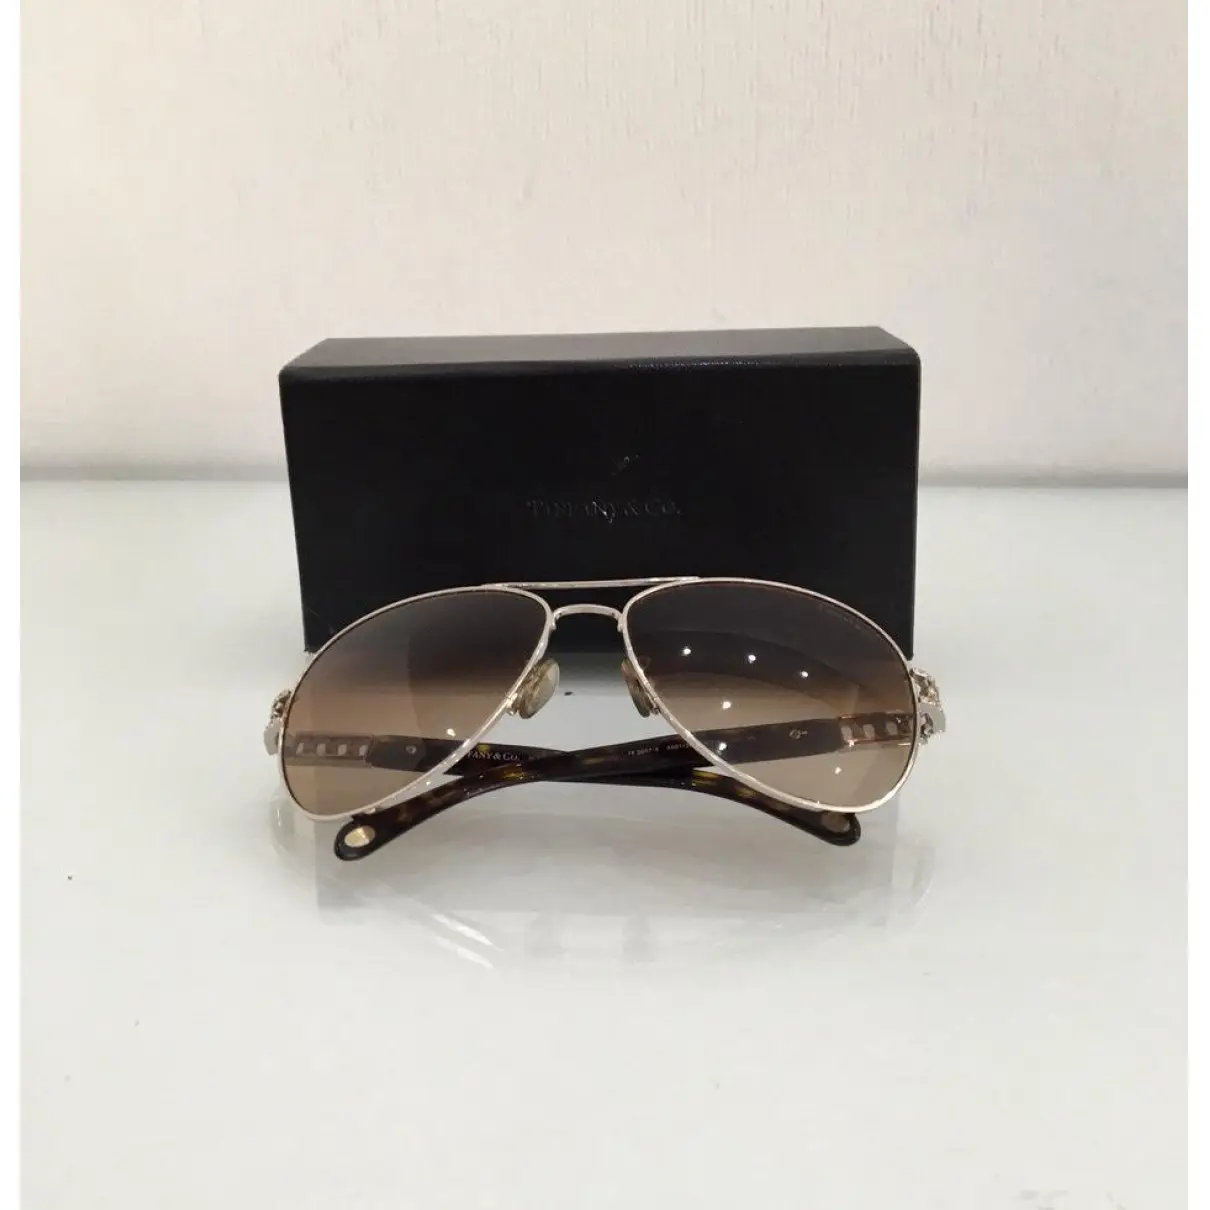 Buy Tiffany & Co Aviator sunglasses online